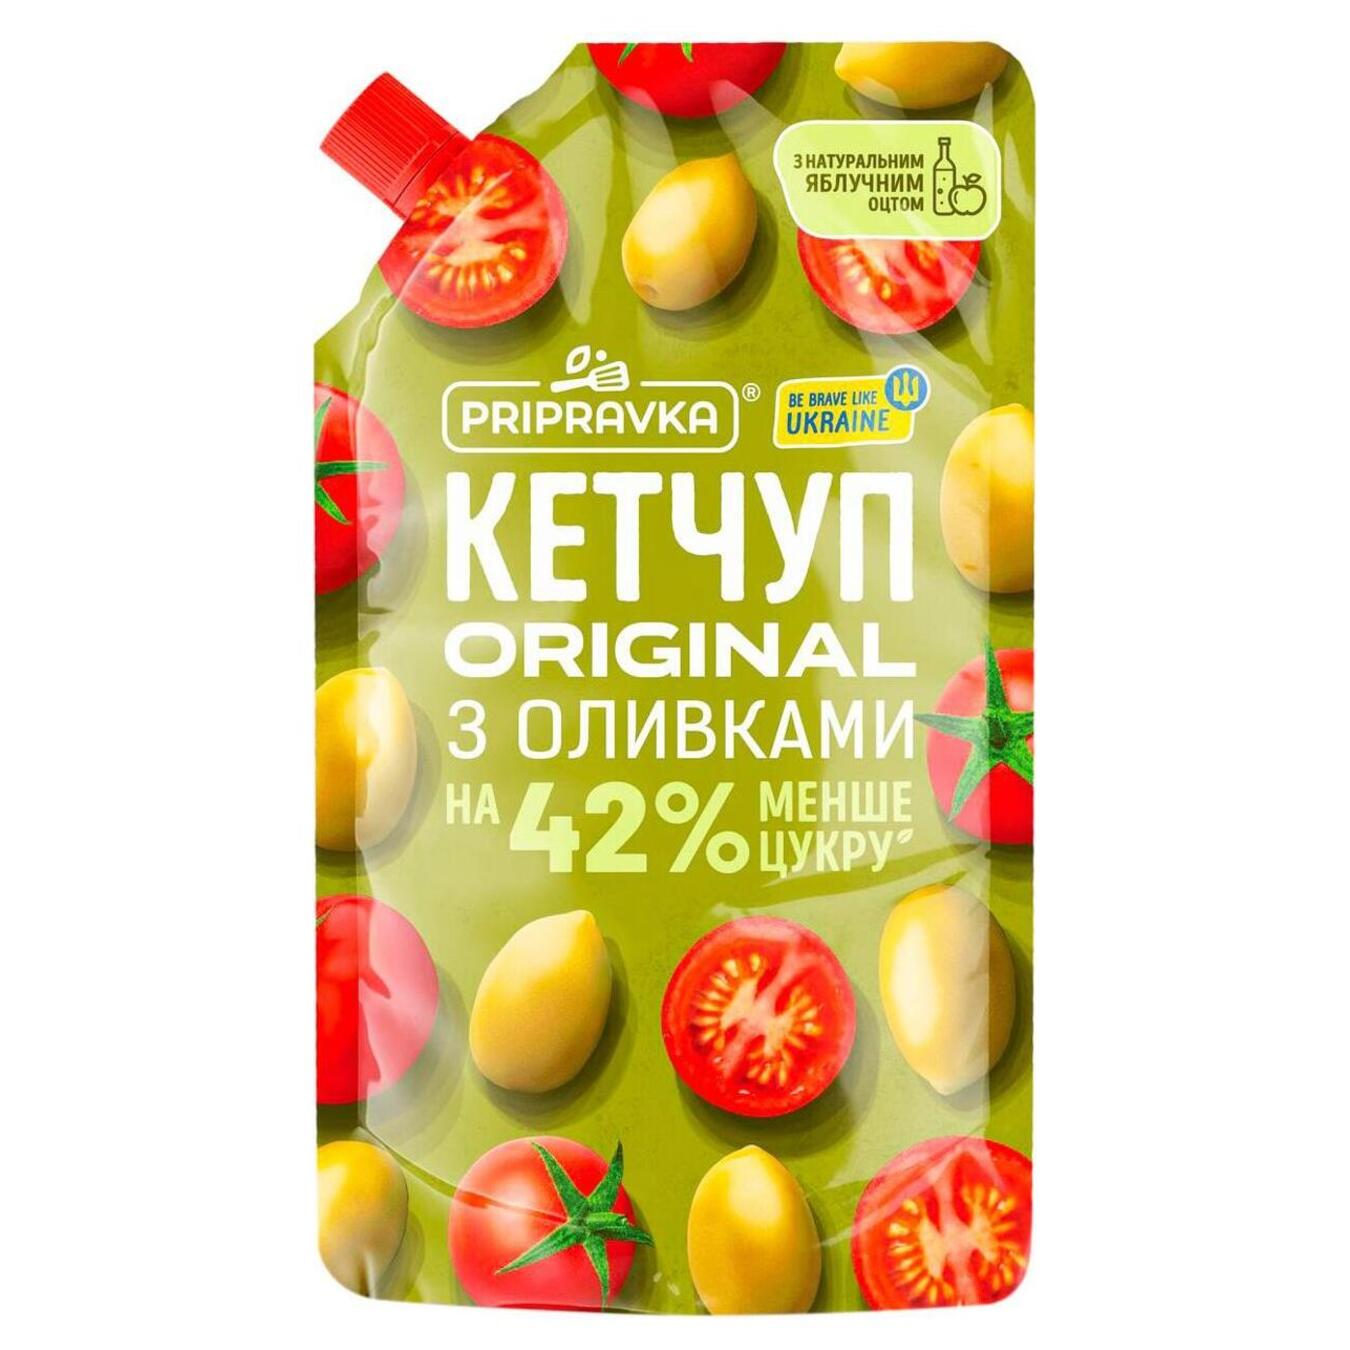 Pripravka ketchup pasteurized Original with olives doi-pak 250g